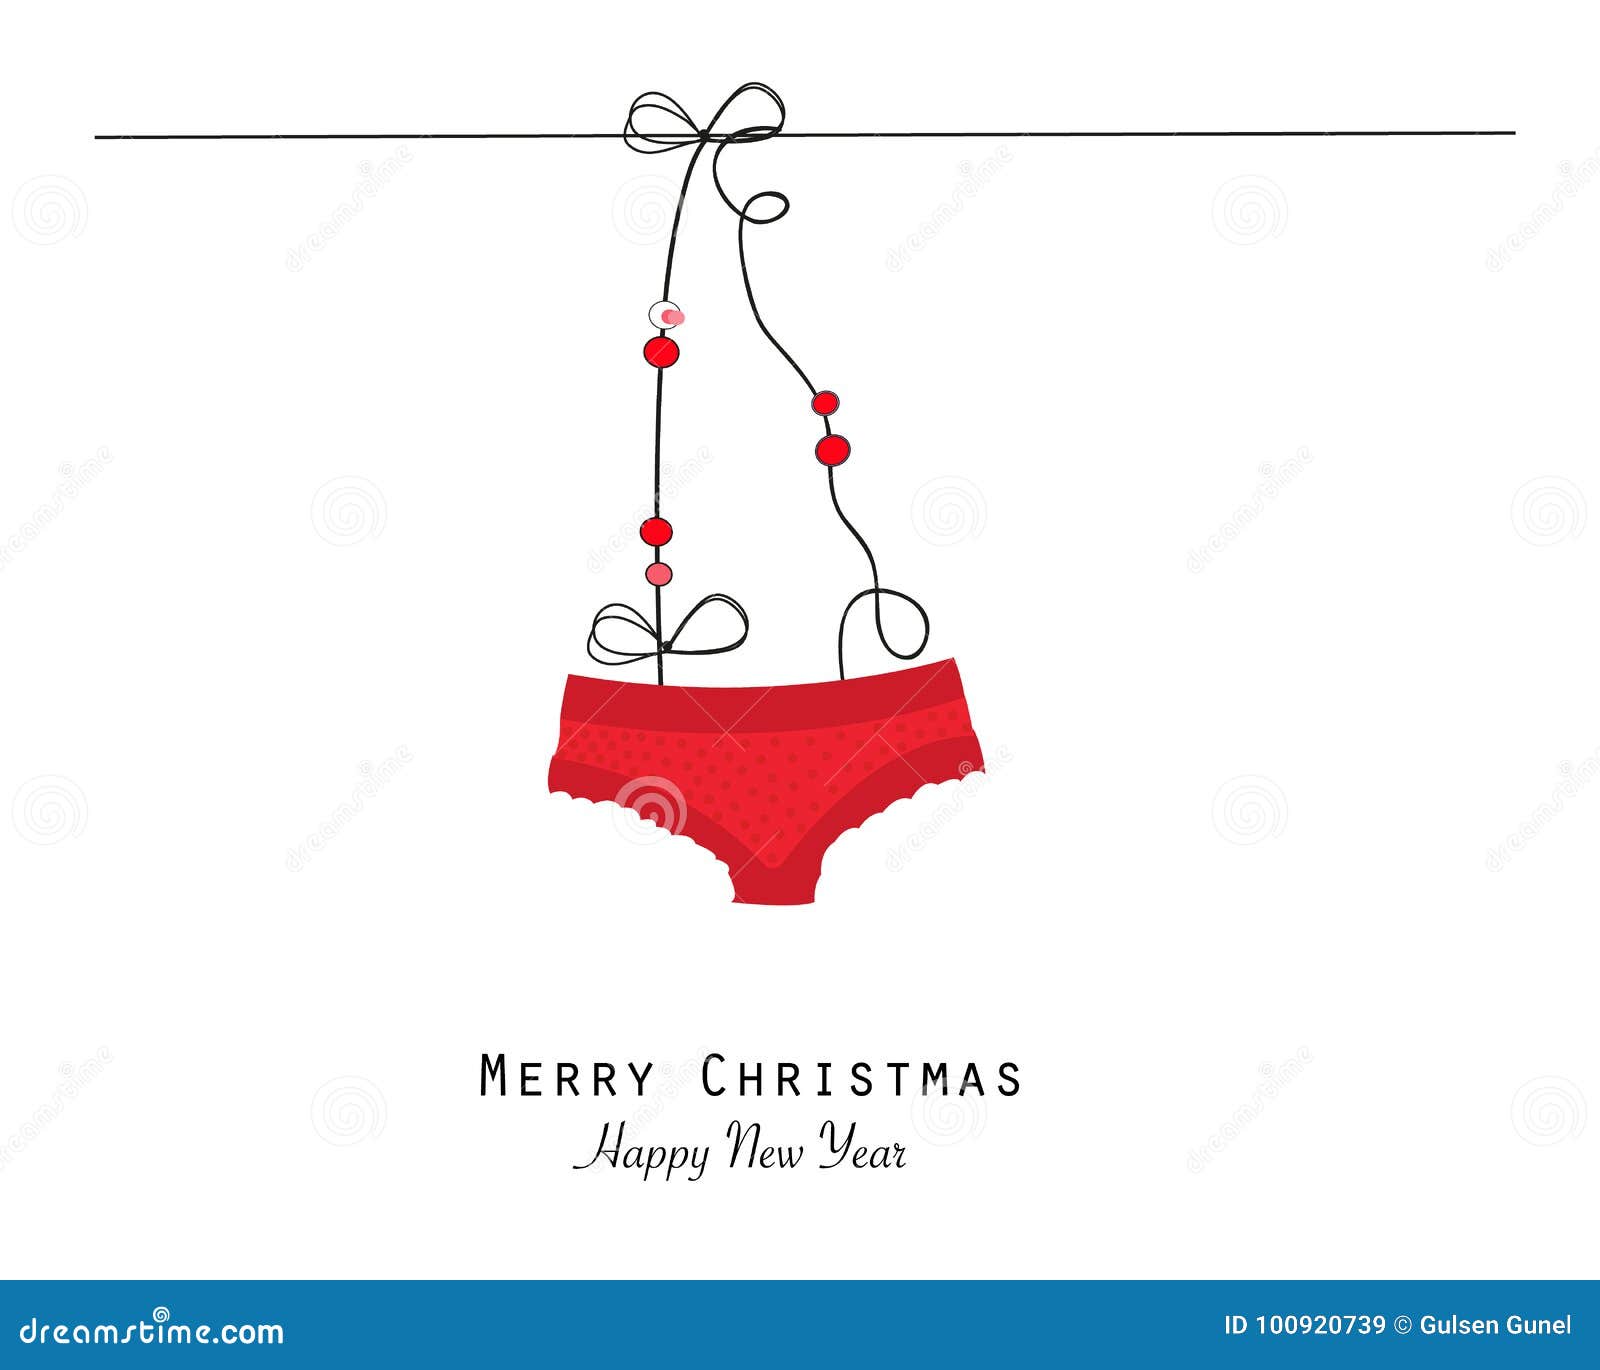 https://thumbs.dreamstime.com/z/christmas-red-panties-underwear-red-lingerie-happy-new-year-greeting-card-christmas-red-panties-underwear-red-lingerie-happy-new-100920739.jpg